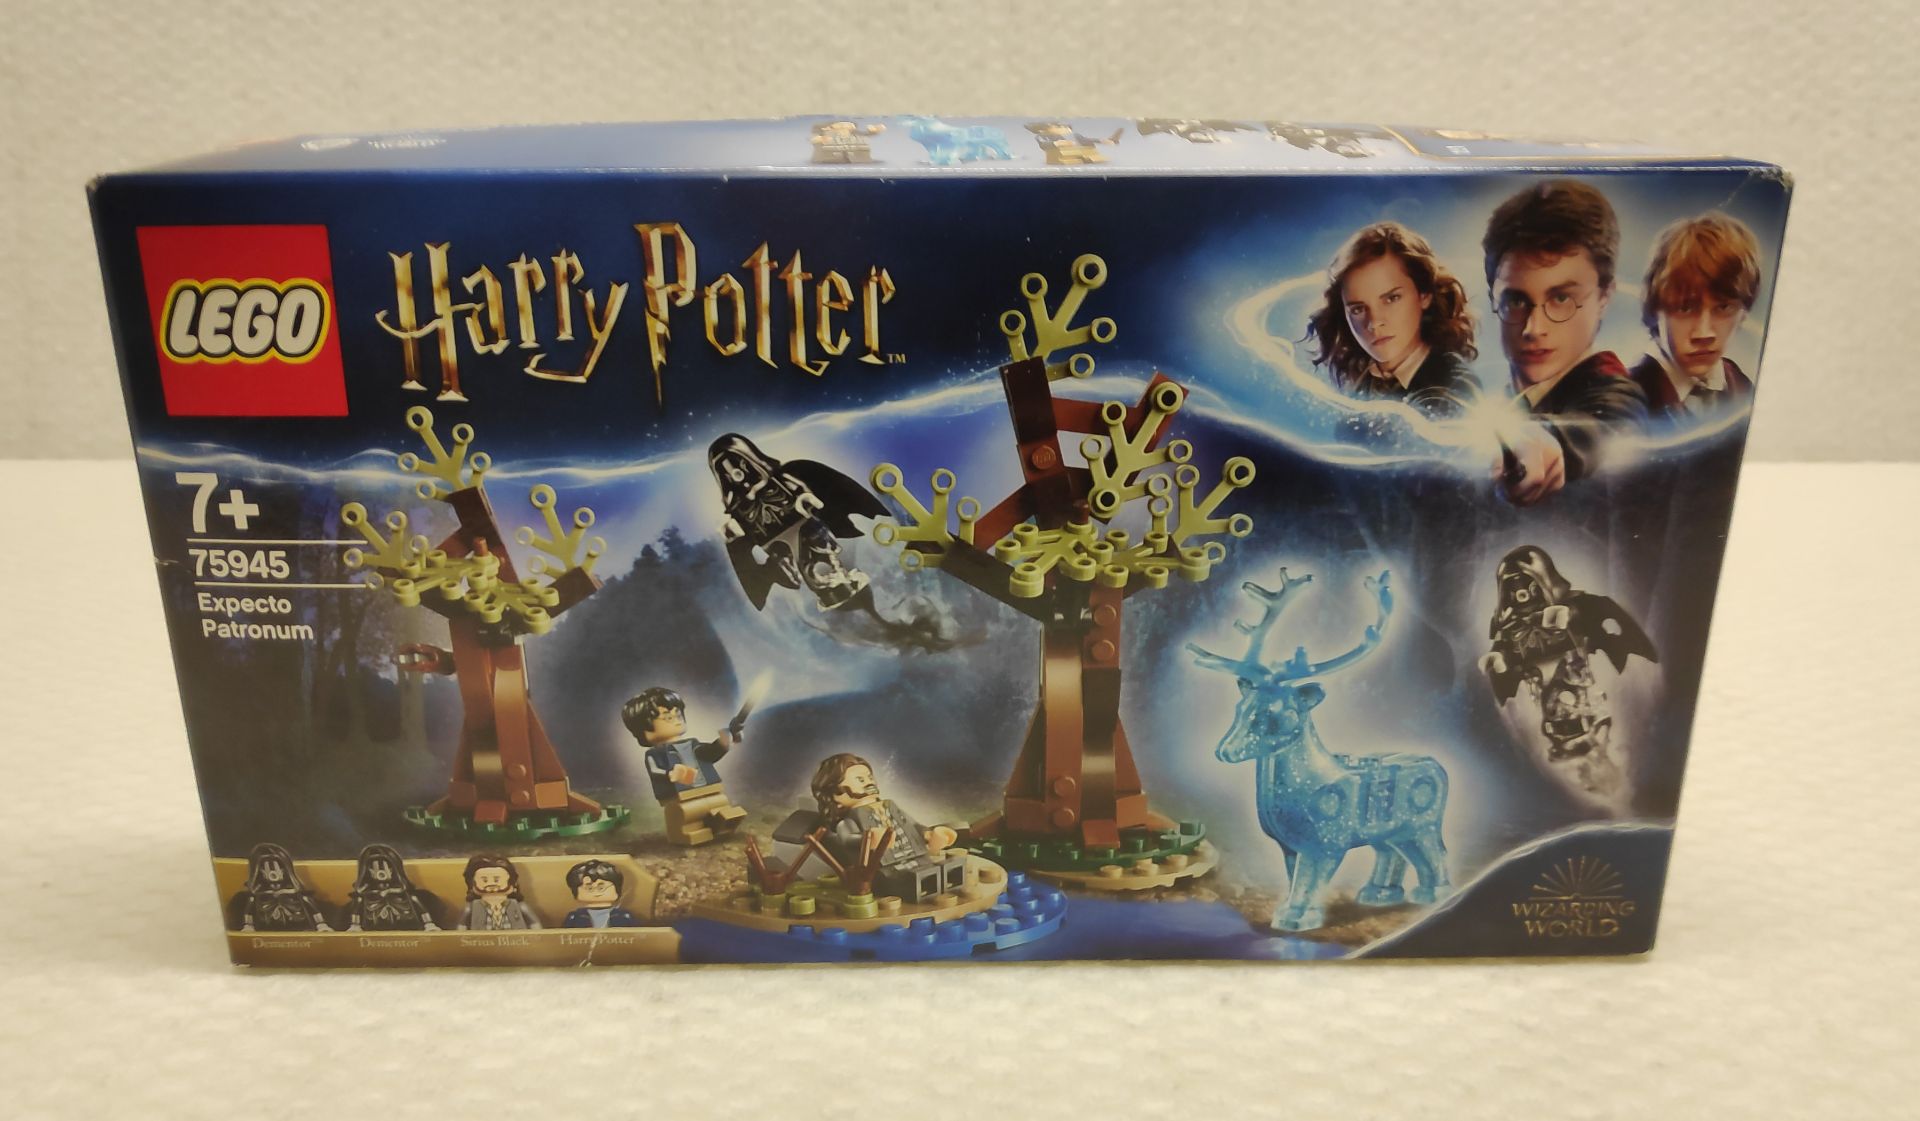 1 x Lego Harry Potter Expecto Patronum Set - New/Boxed - Set # 75945